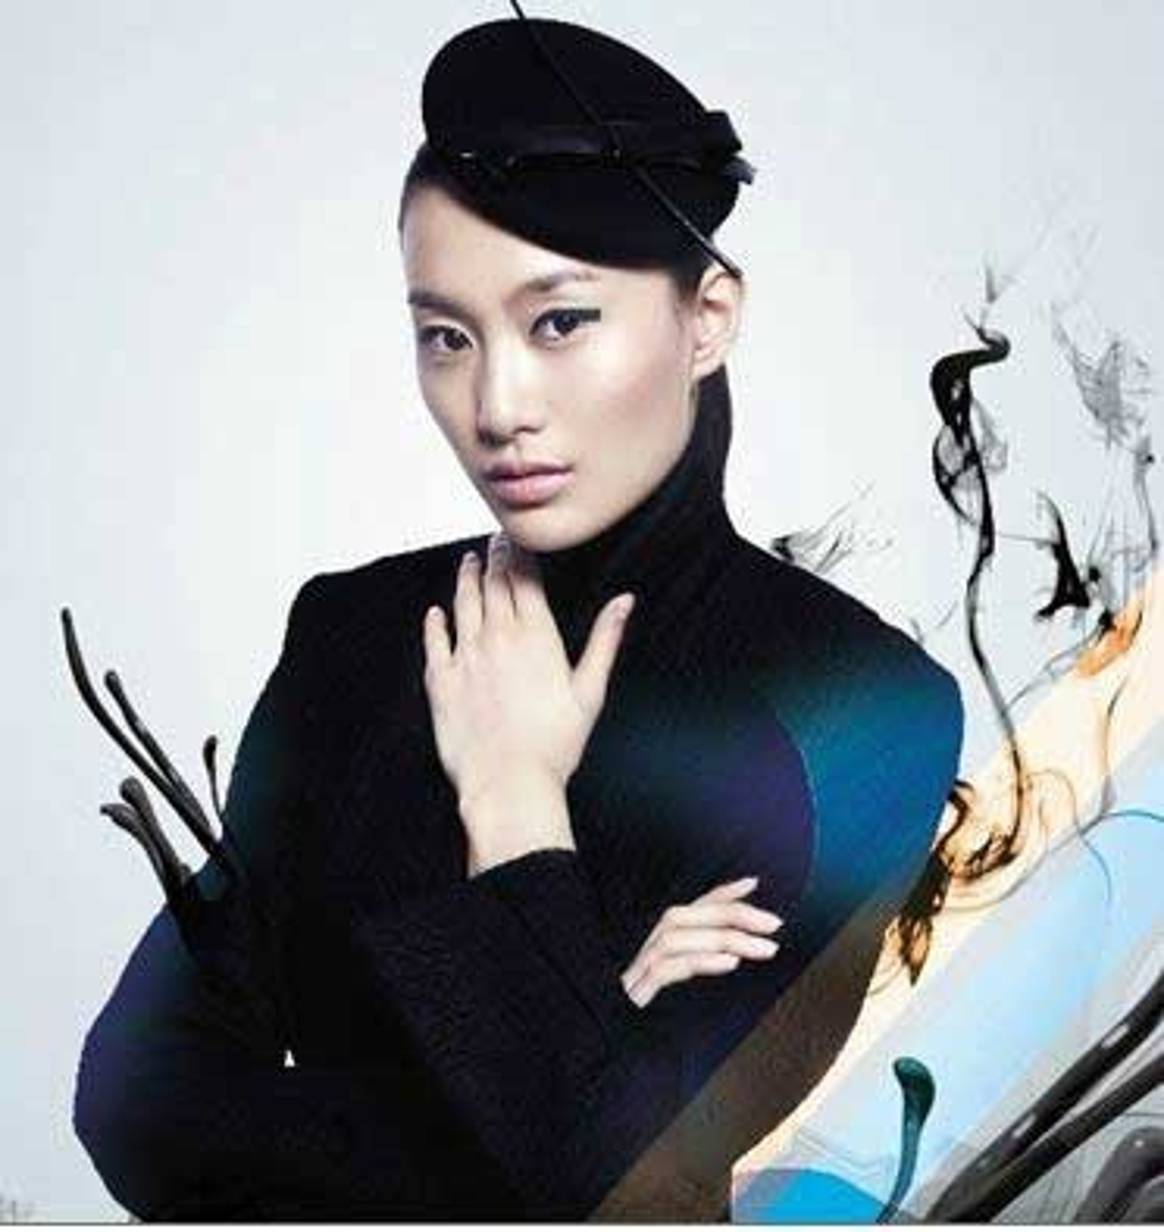 Shanghai Fashion Week highlights domestic brands